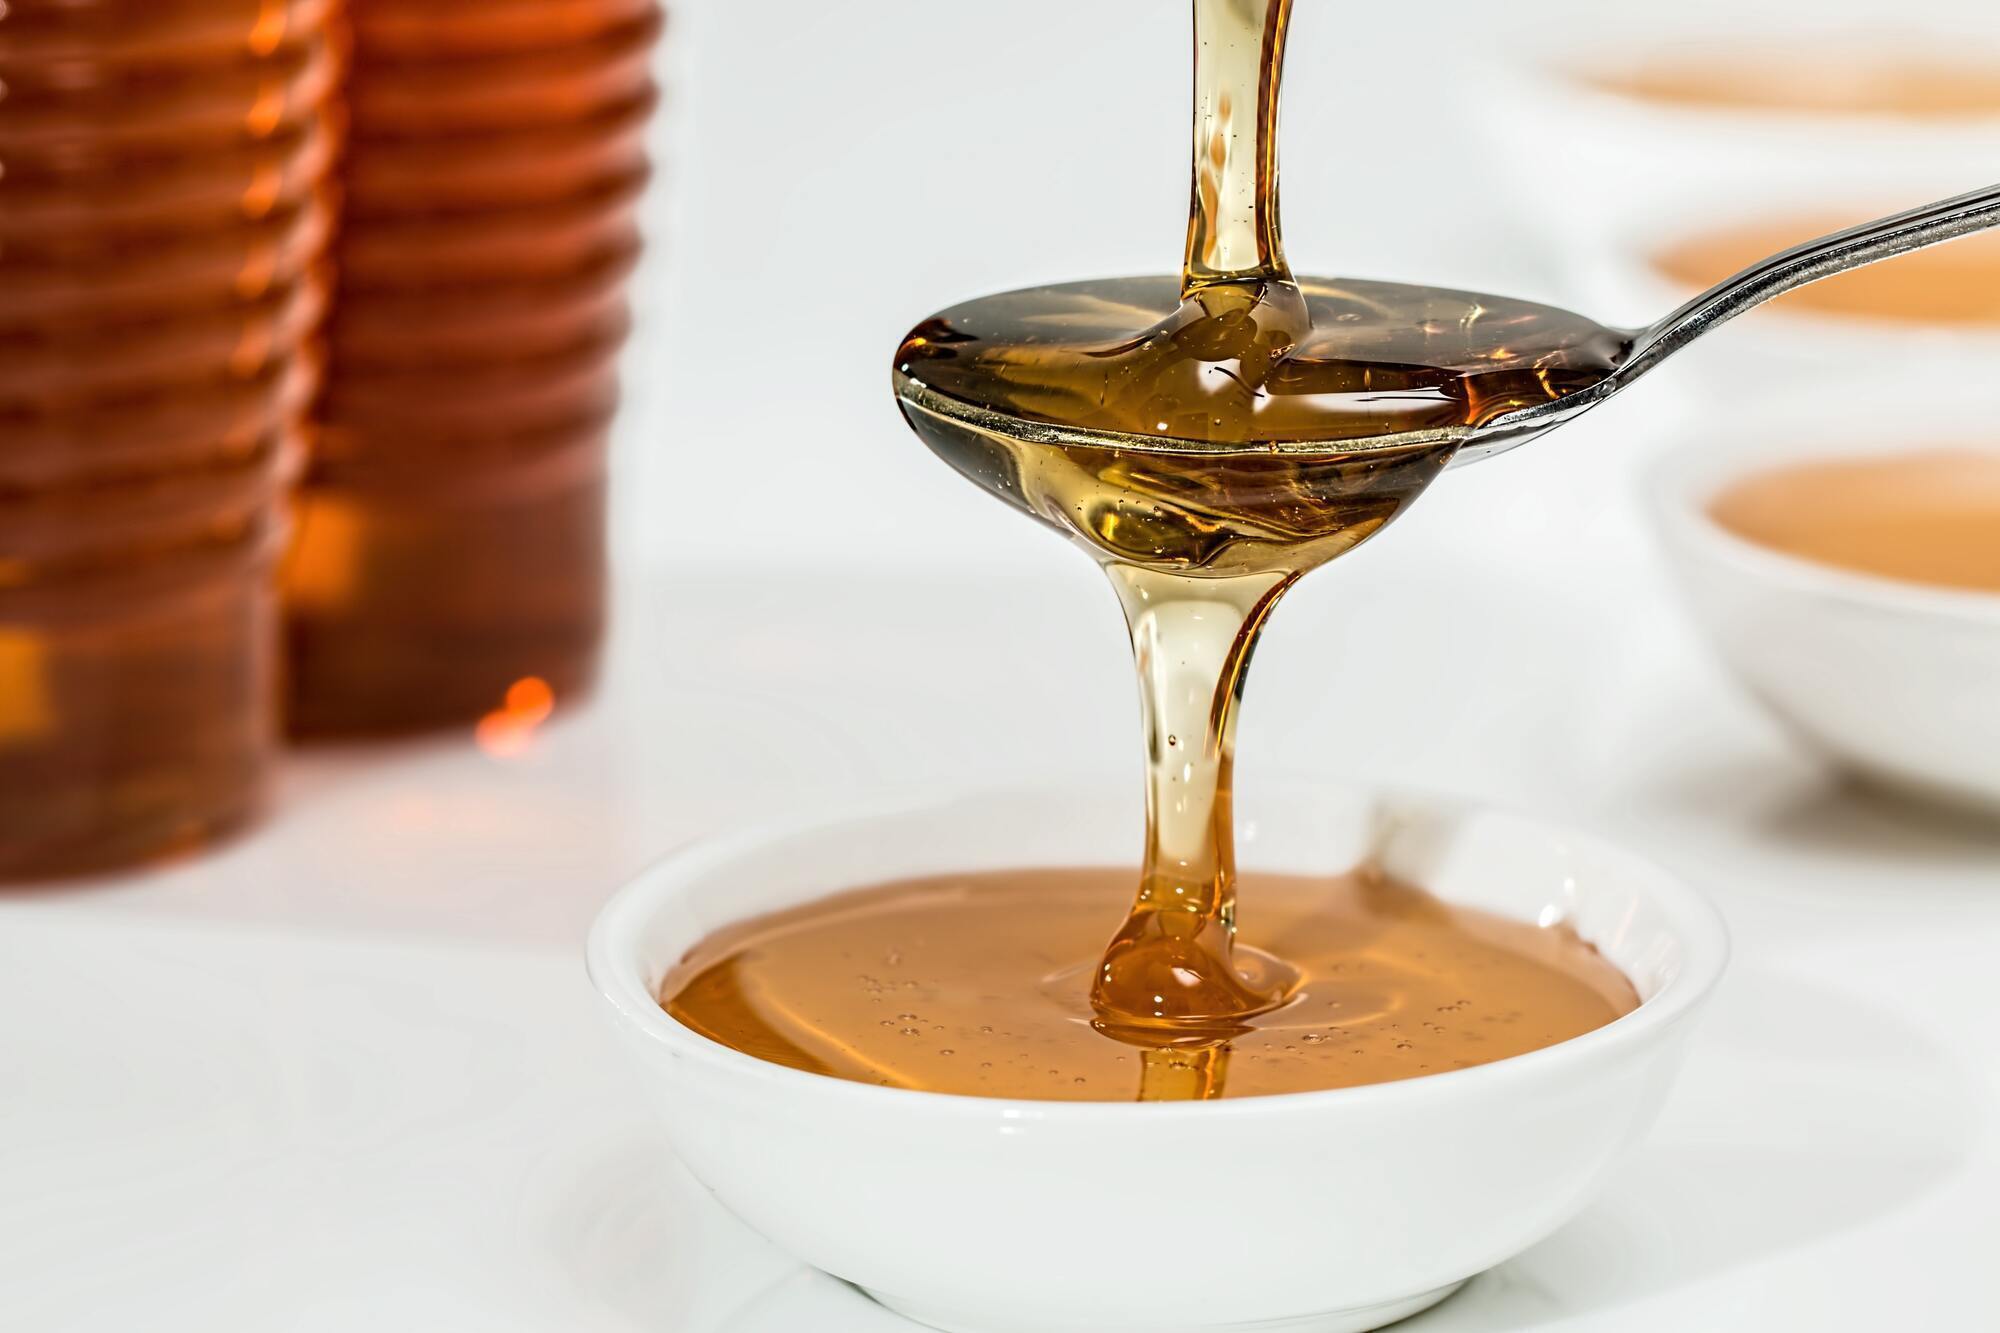 Liquid honey